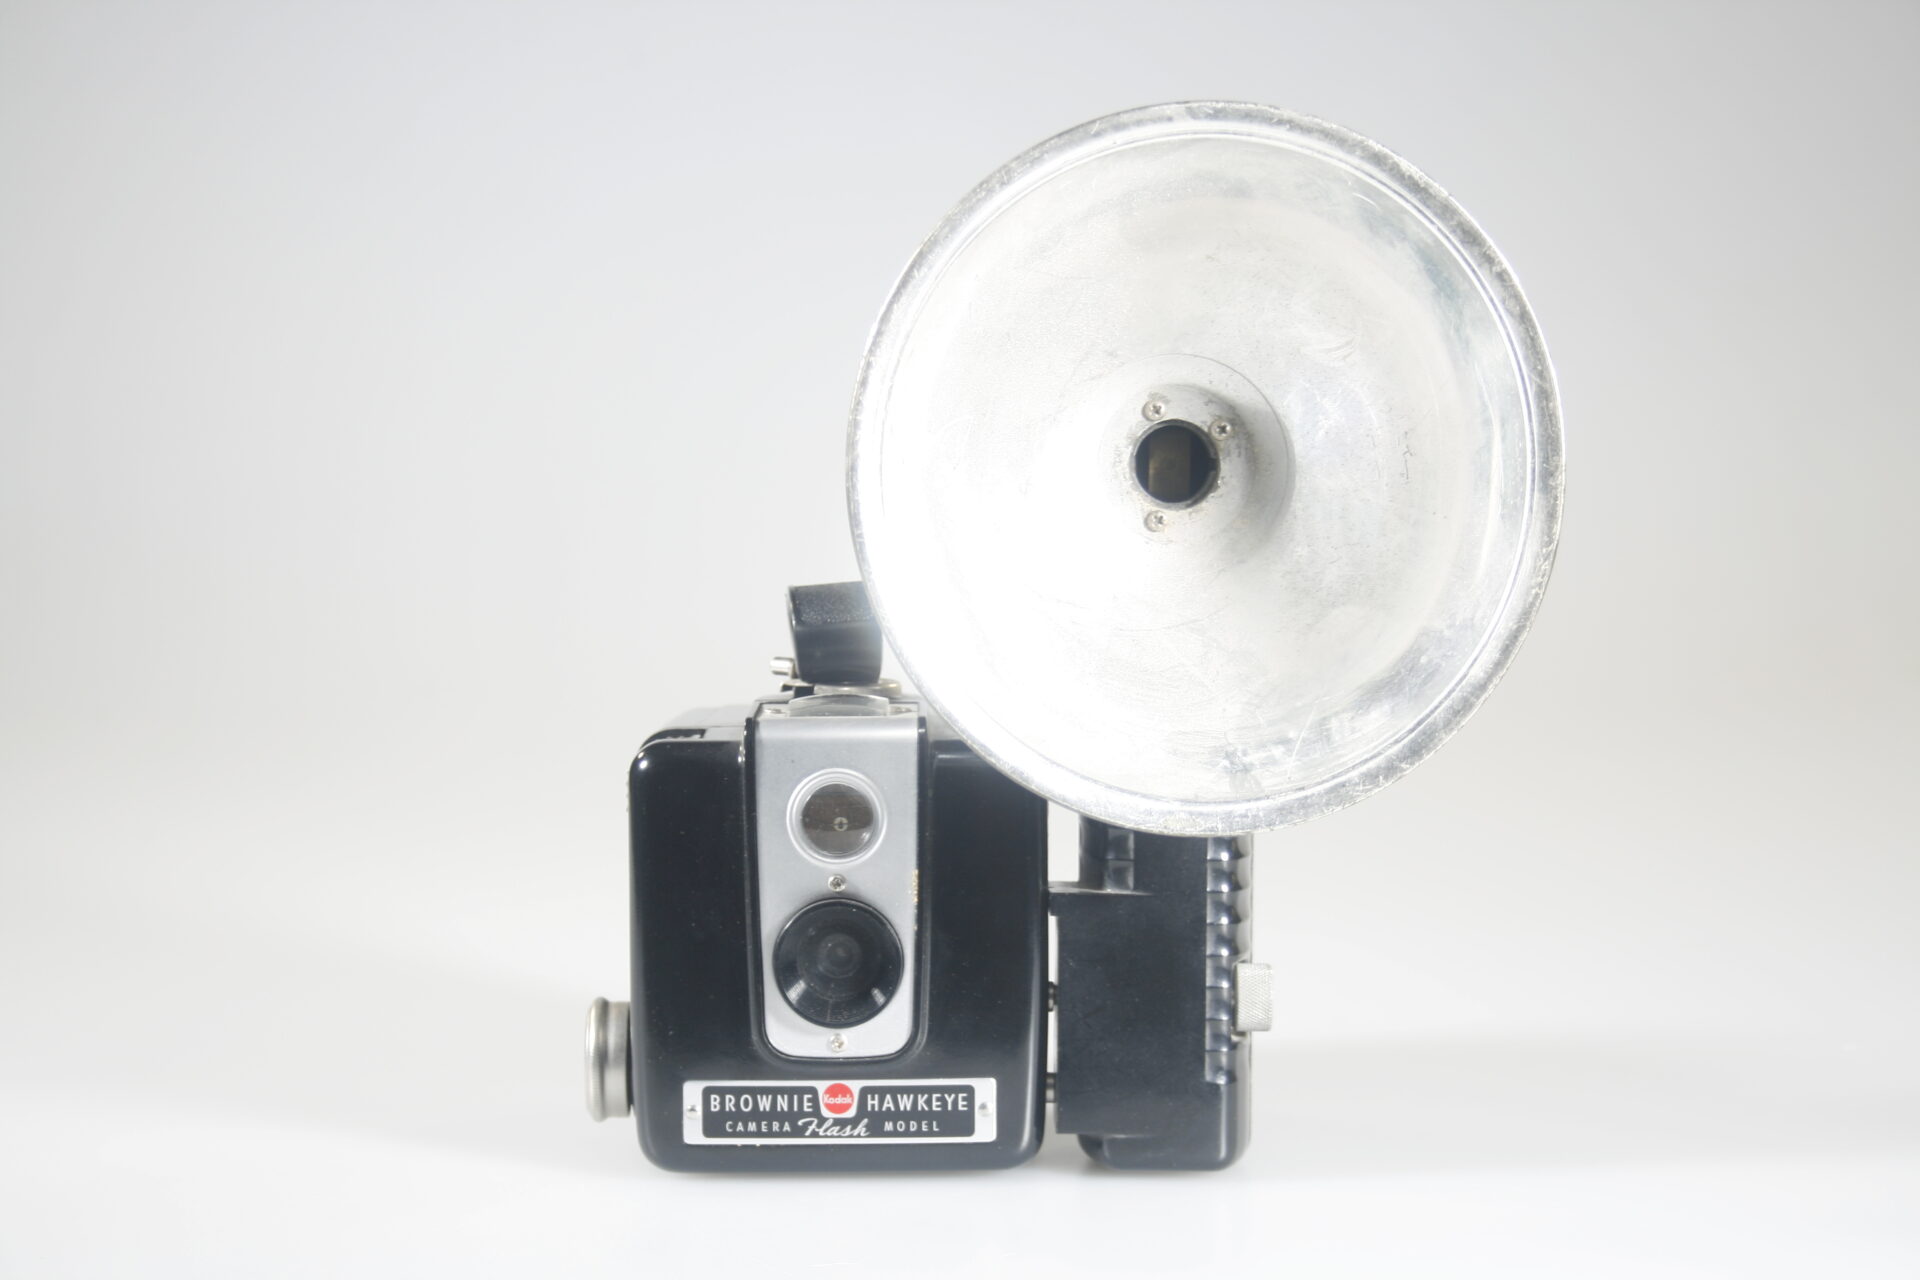 Kodak Brownie Hawkeye Flash. Bakkelieten box camera met flits. 620 film. 1950-1961. USA